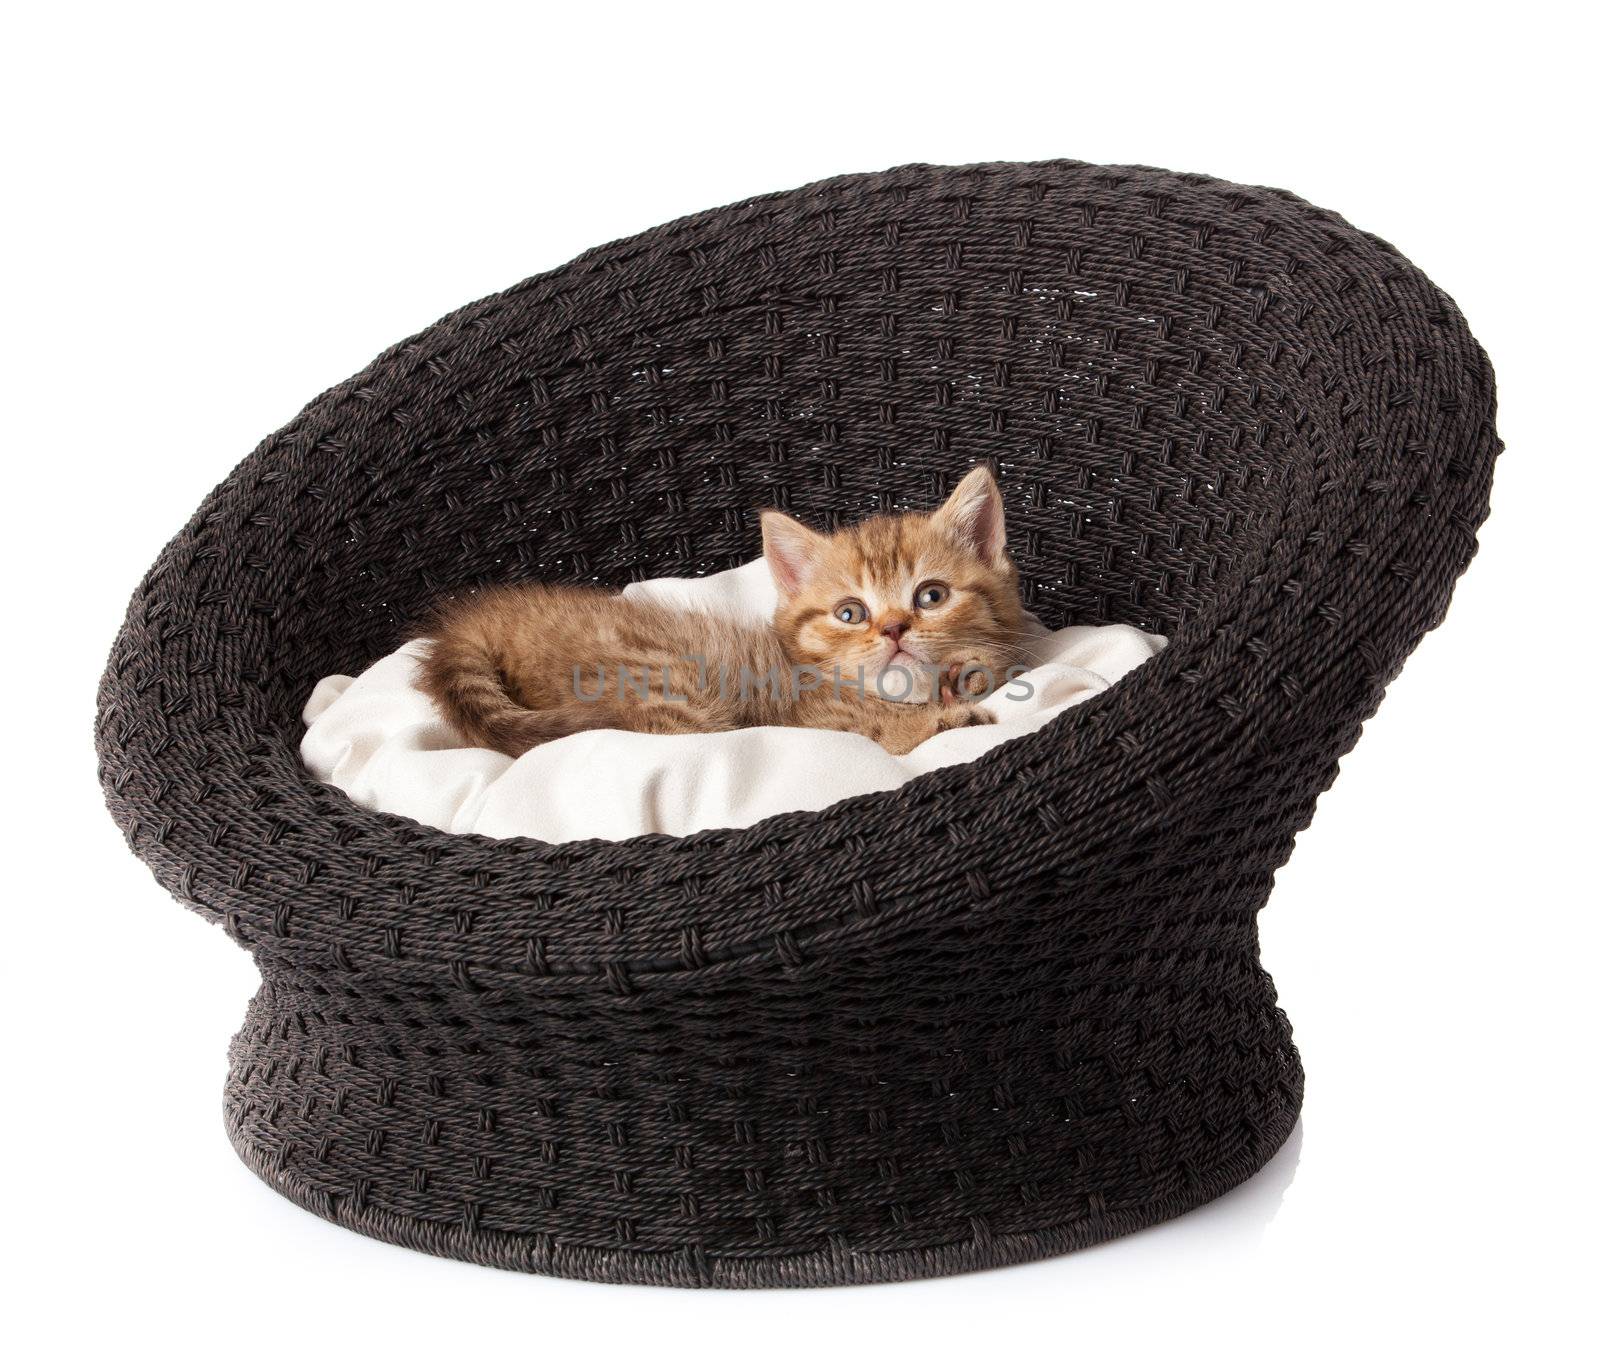 kitten sleeping in the basket by ewastudio